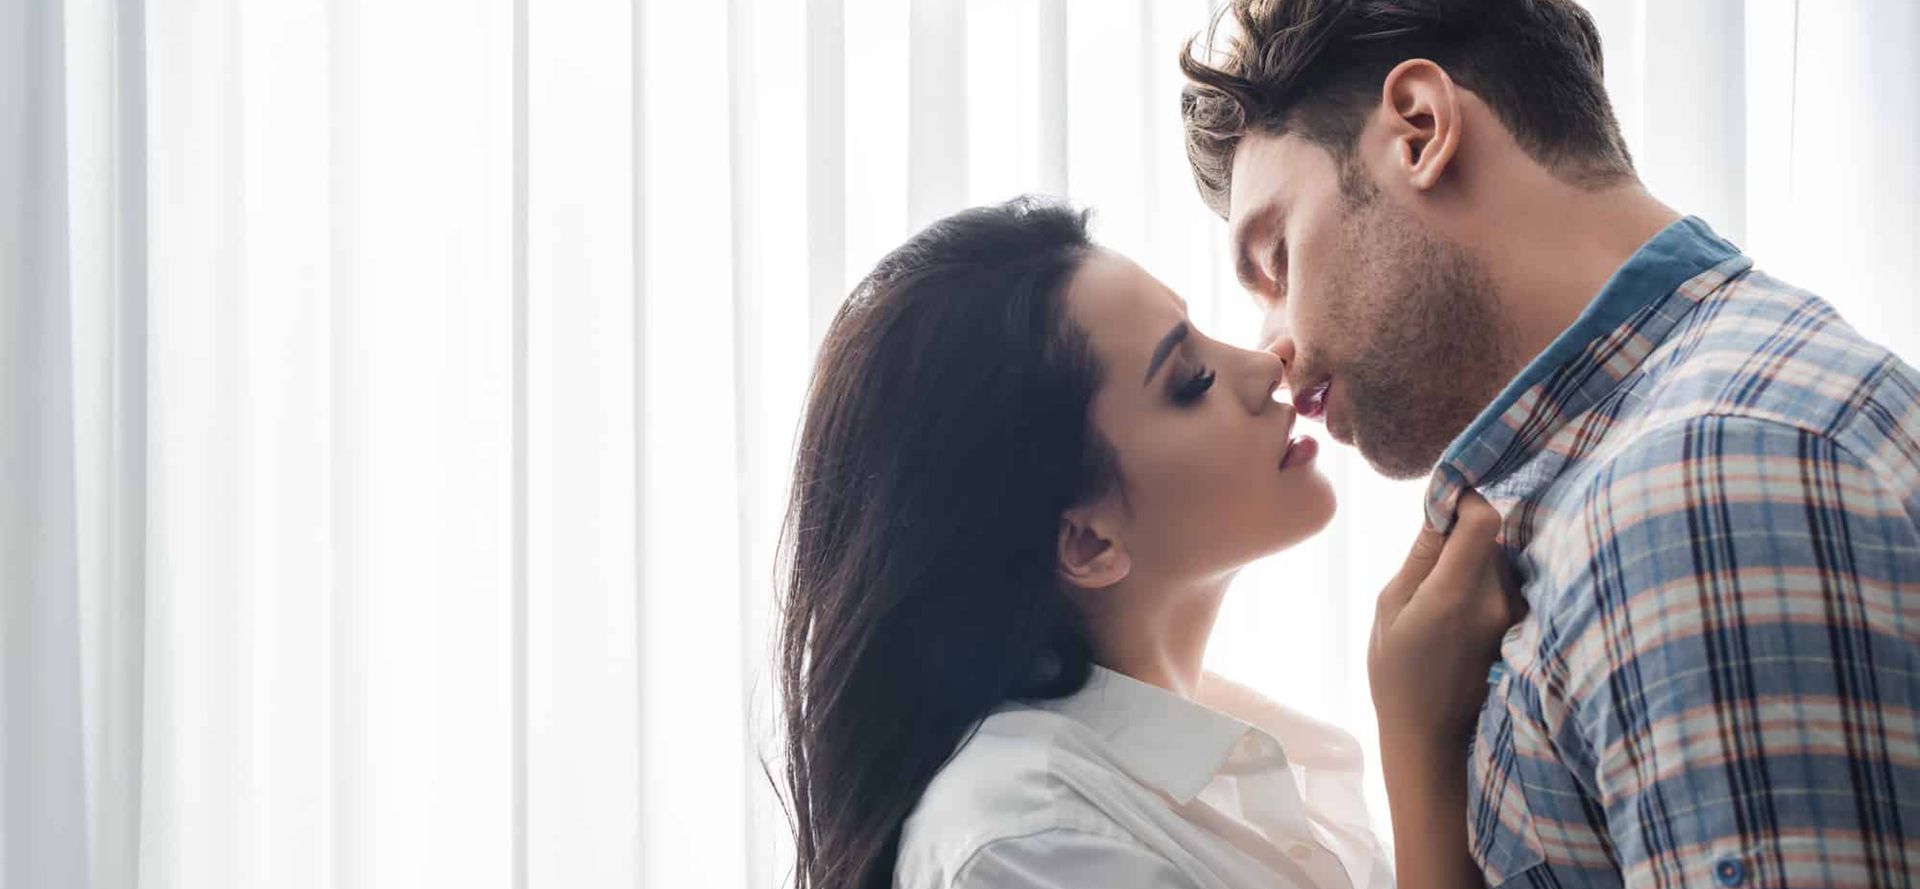 A Capricorn man kisses a woman.